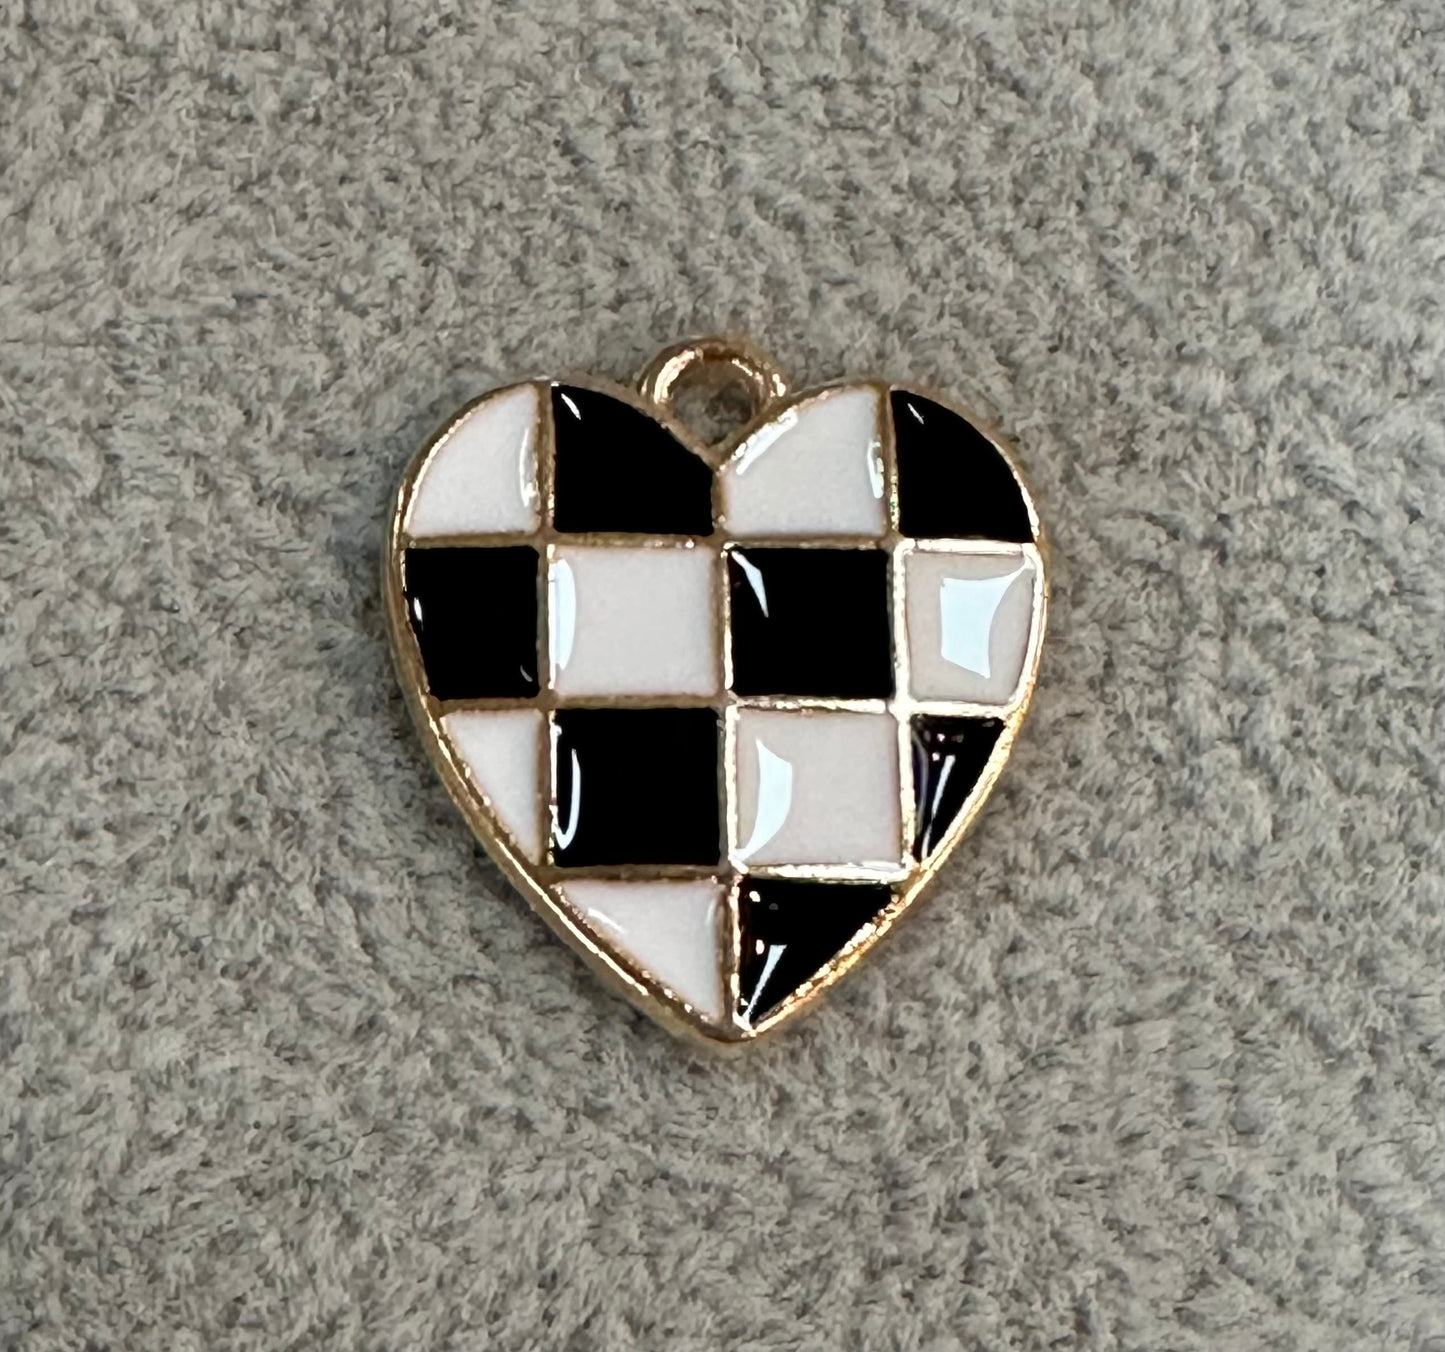 Black Checkered Heart